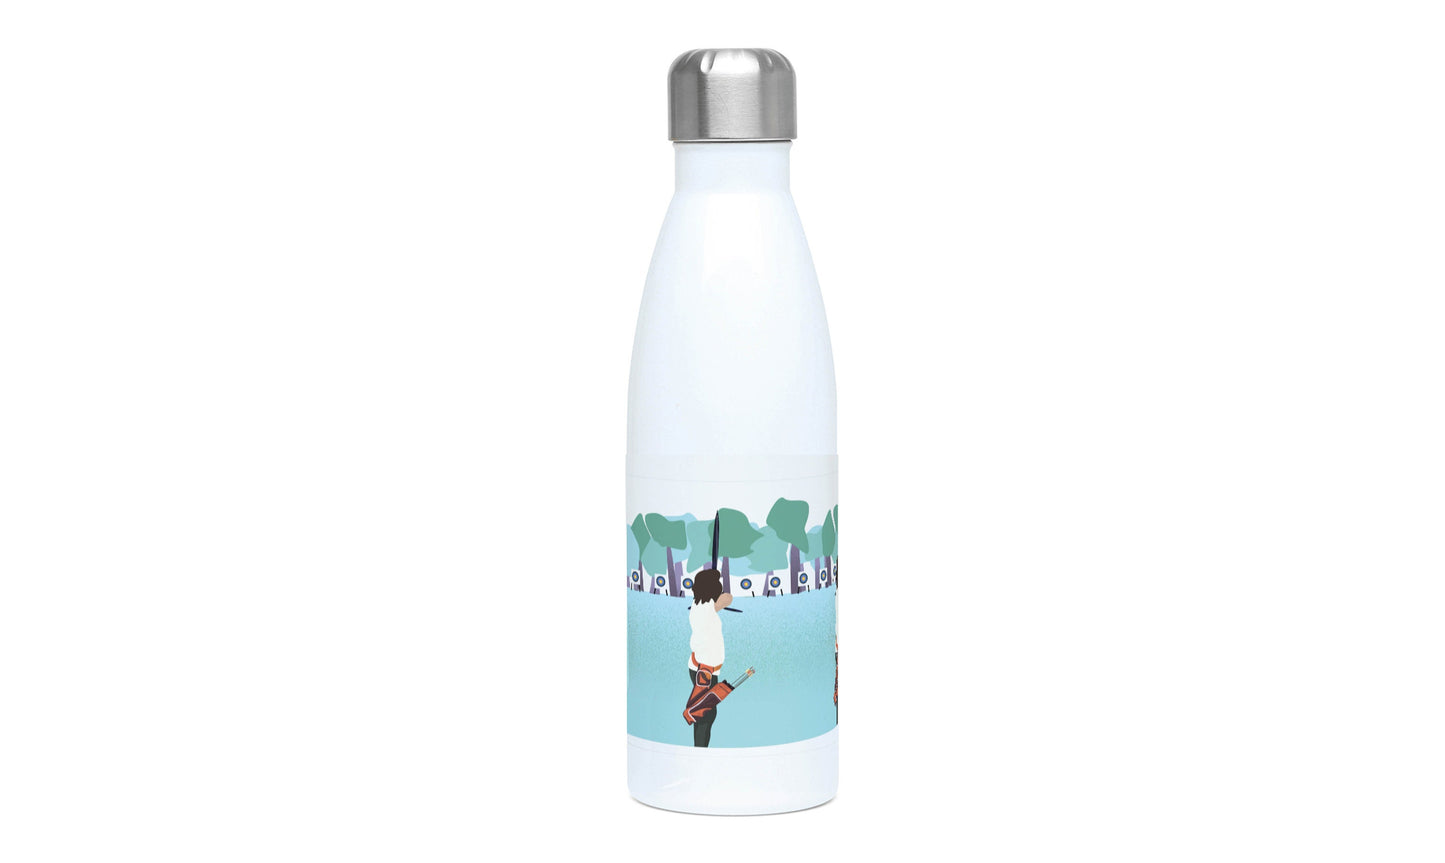 Insulated archery bottle "'L'archère" - customizable